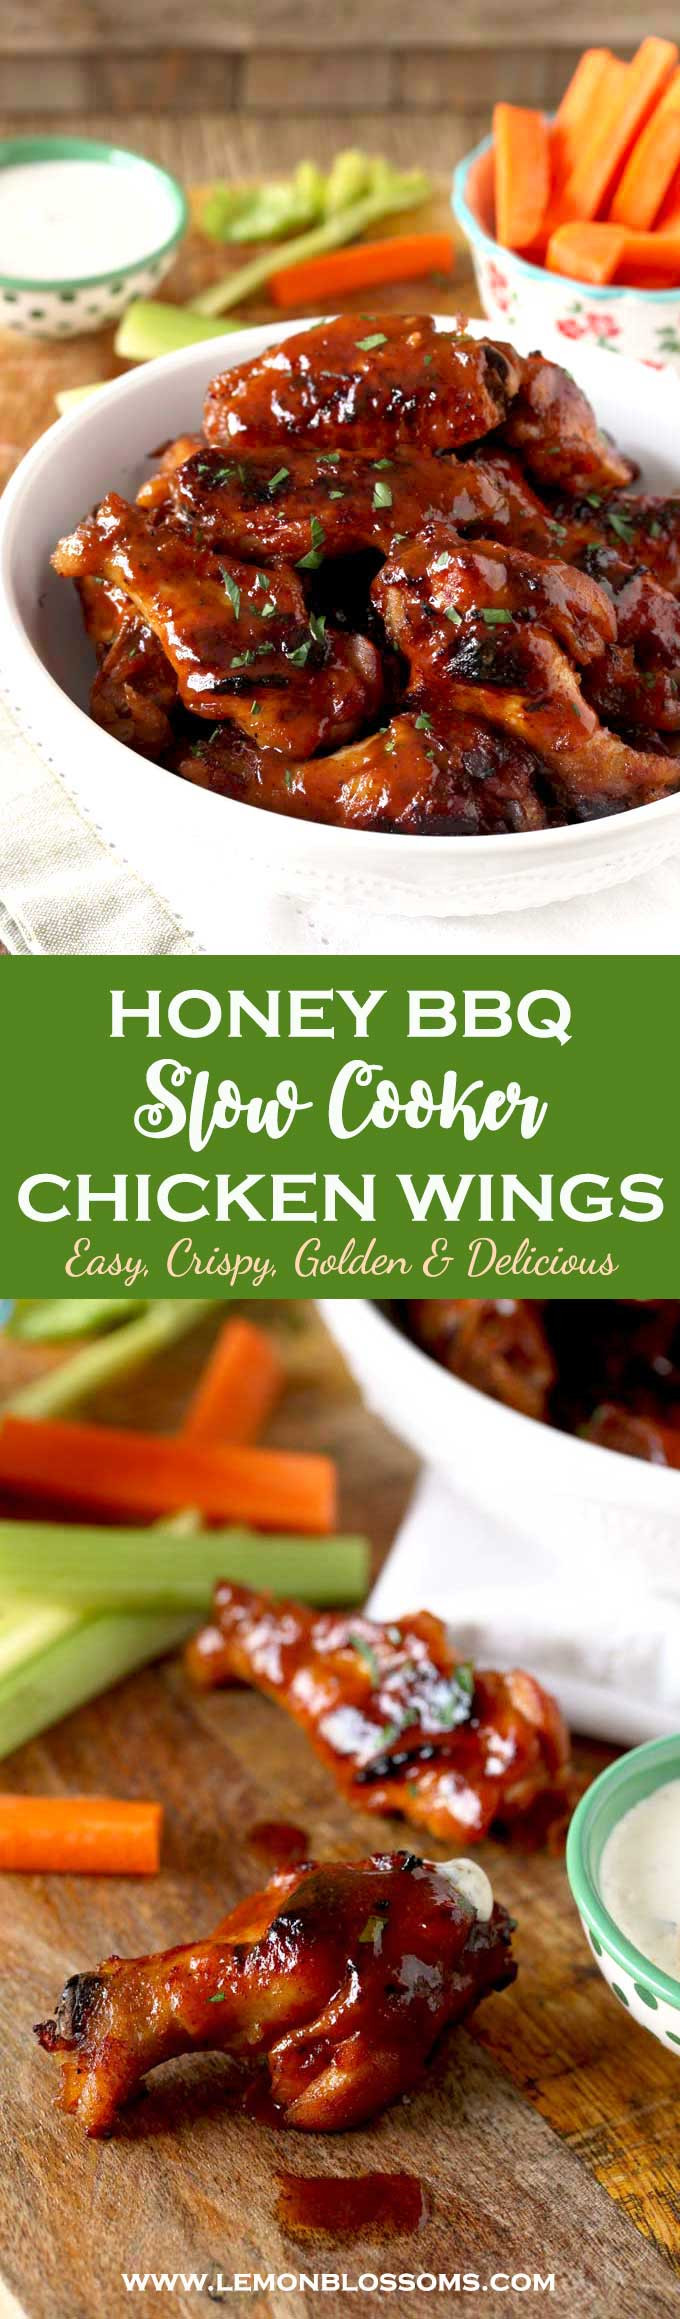 Easy Slow Cooker Chicken Wings Recipe
 Honey BBQ Slow Cooker Chicken Wings